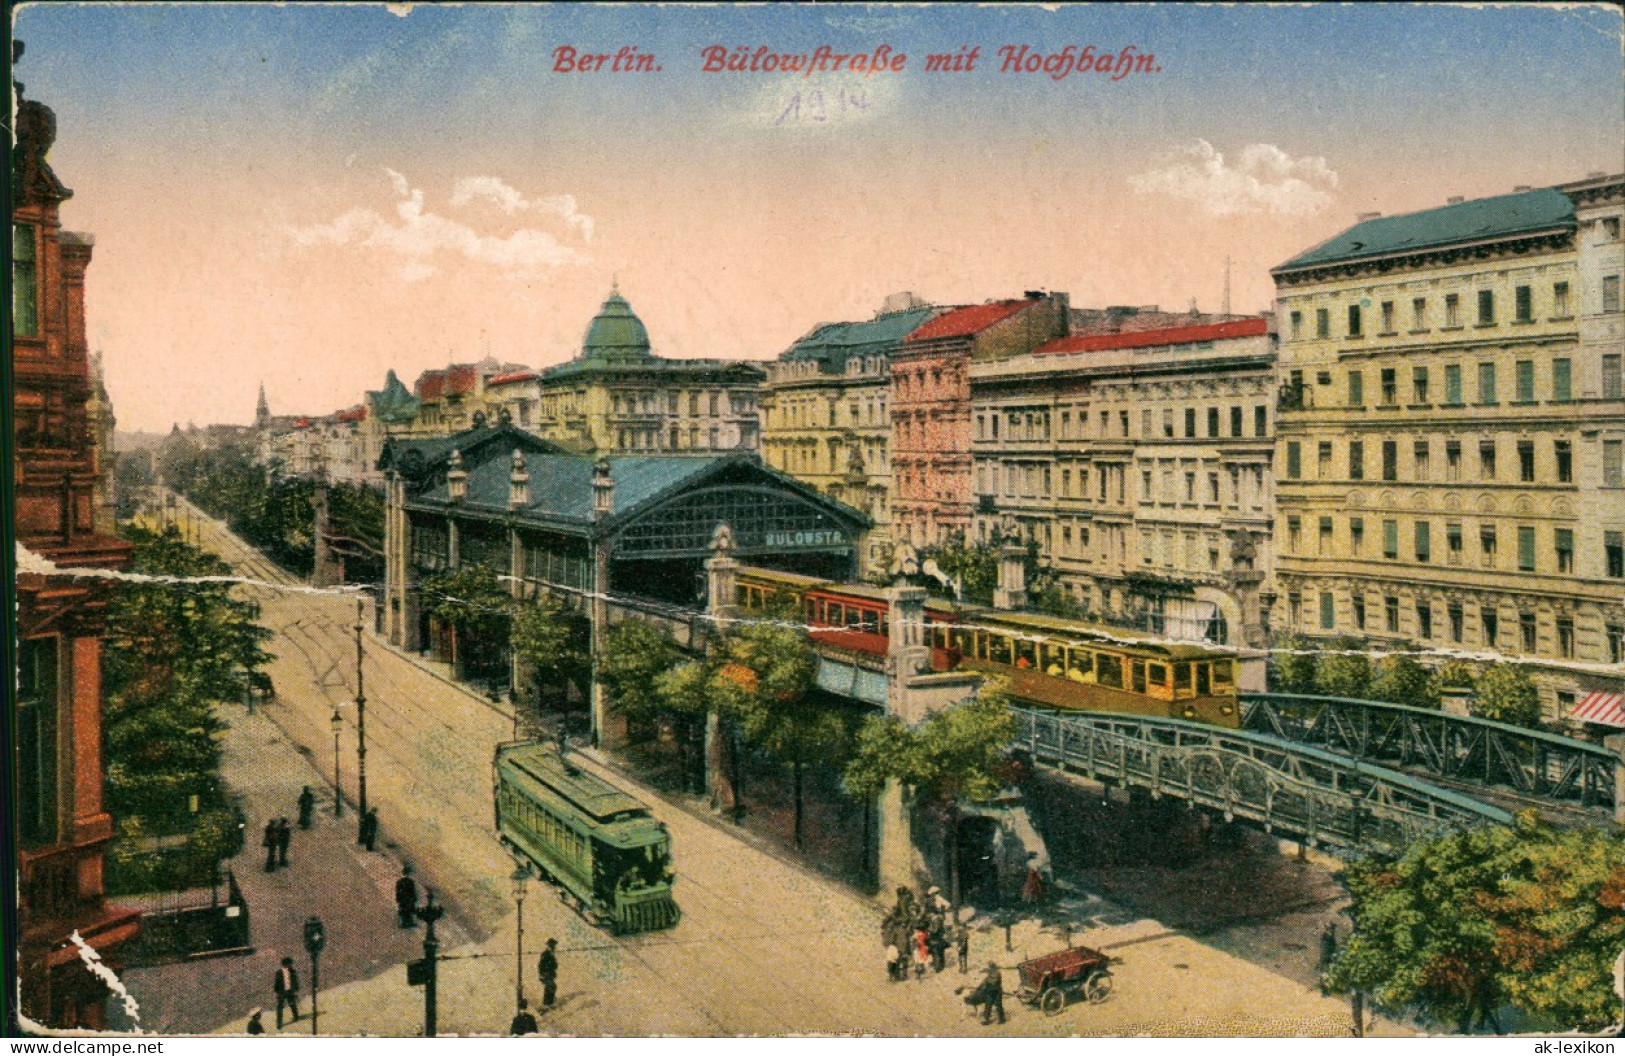 Ansichtskarte Schöneberg-Berlin Bülowstraße  Hochbahn. 1916   Feldpost Tempelhof - Schöneberg